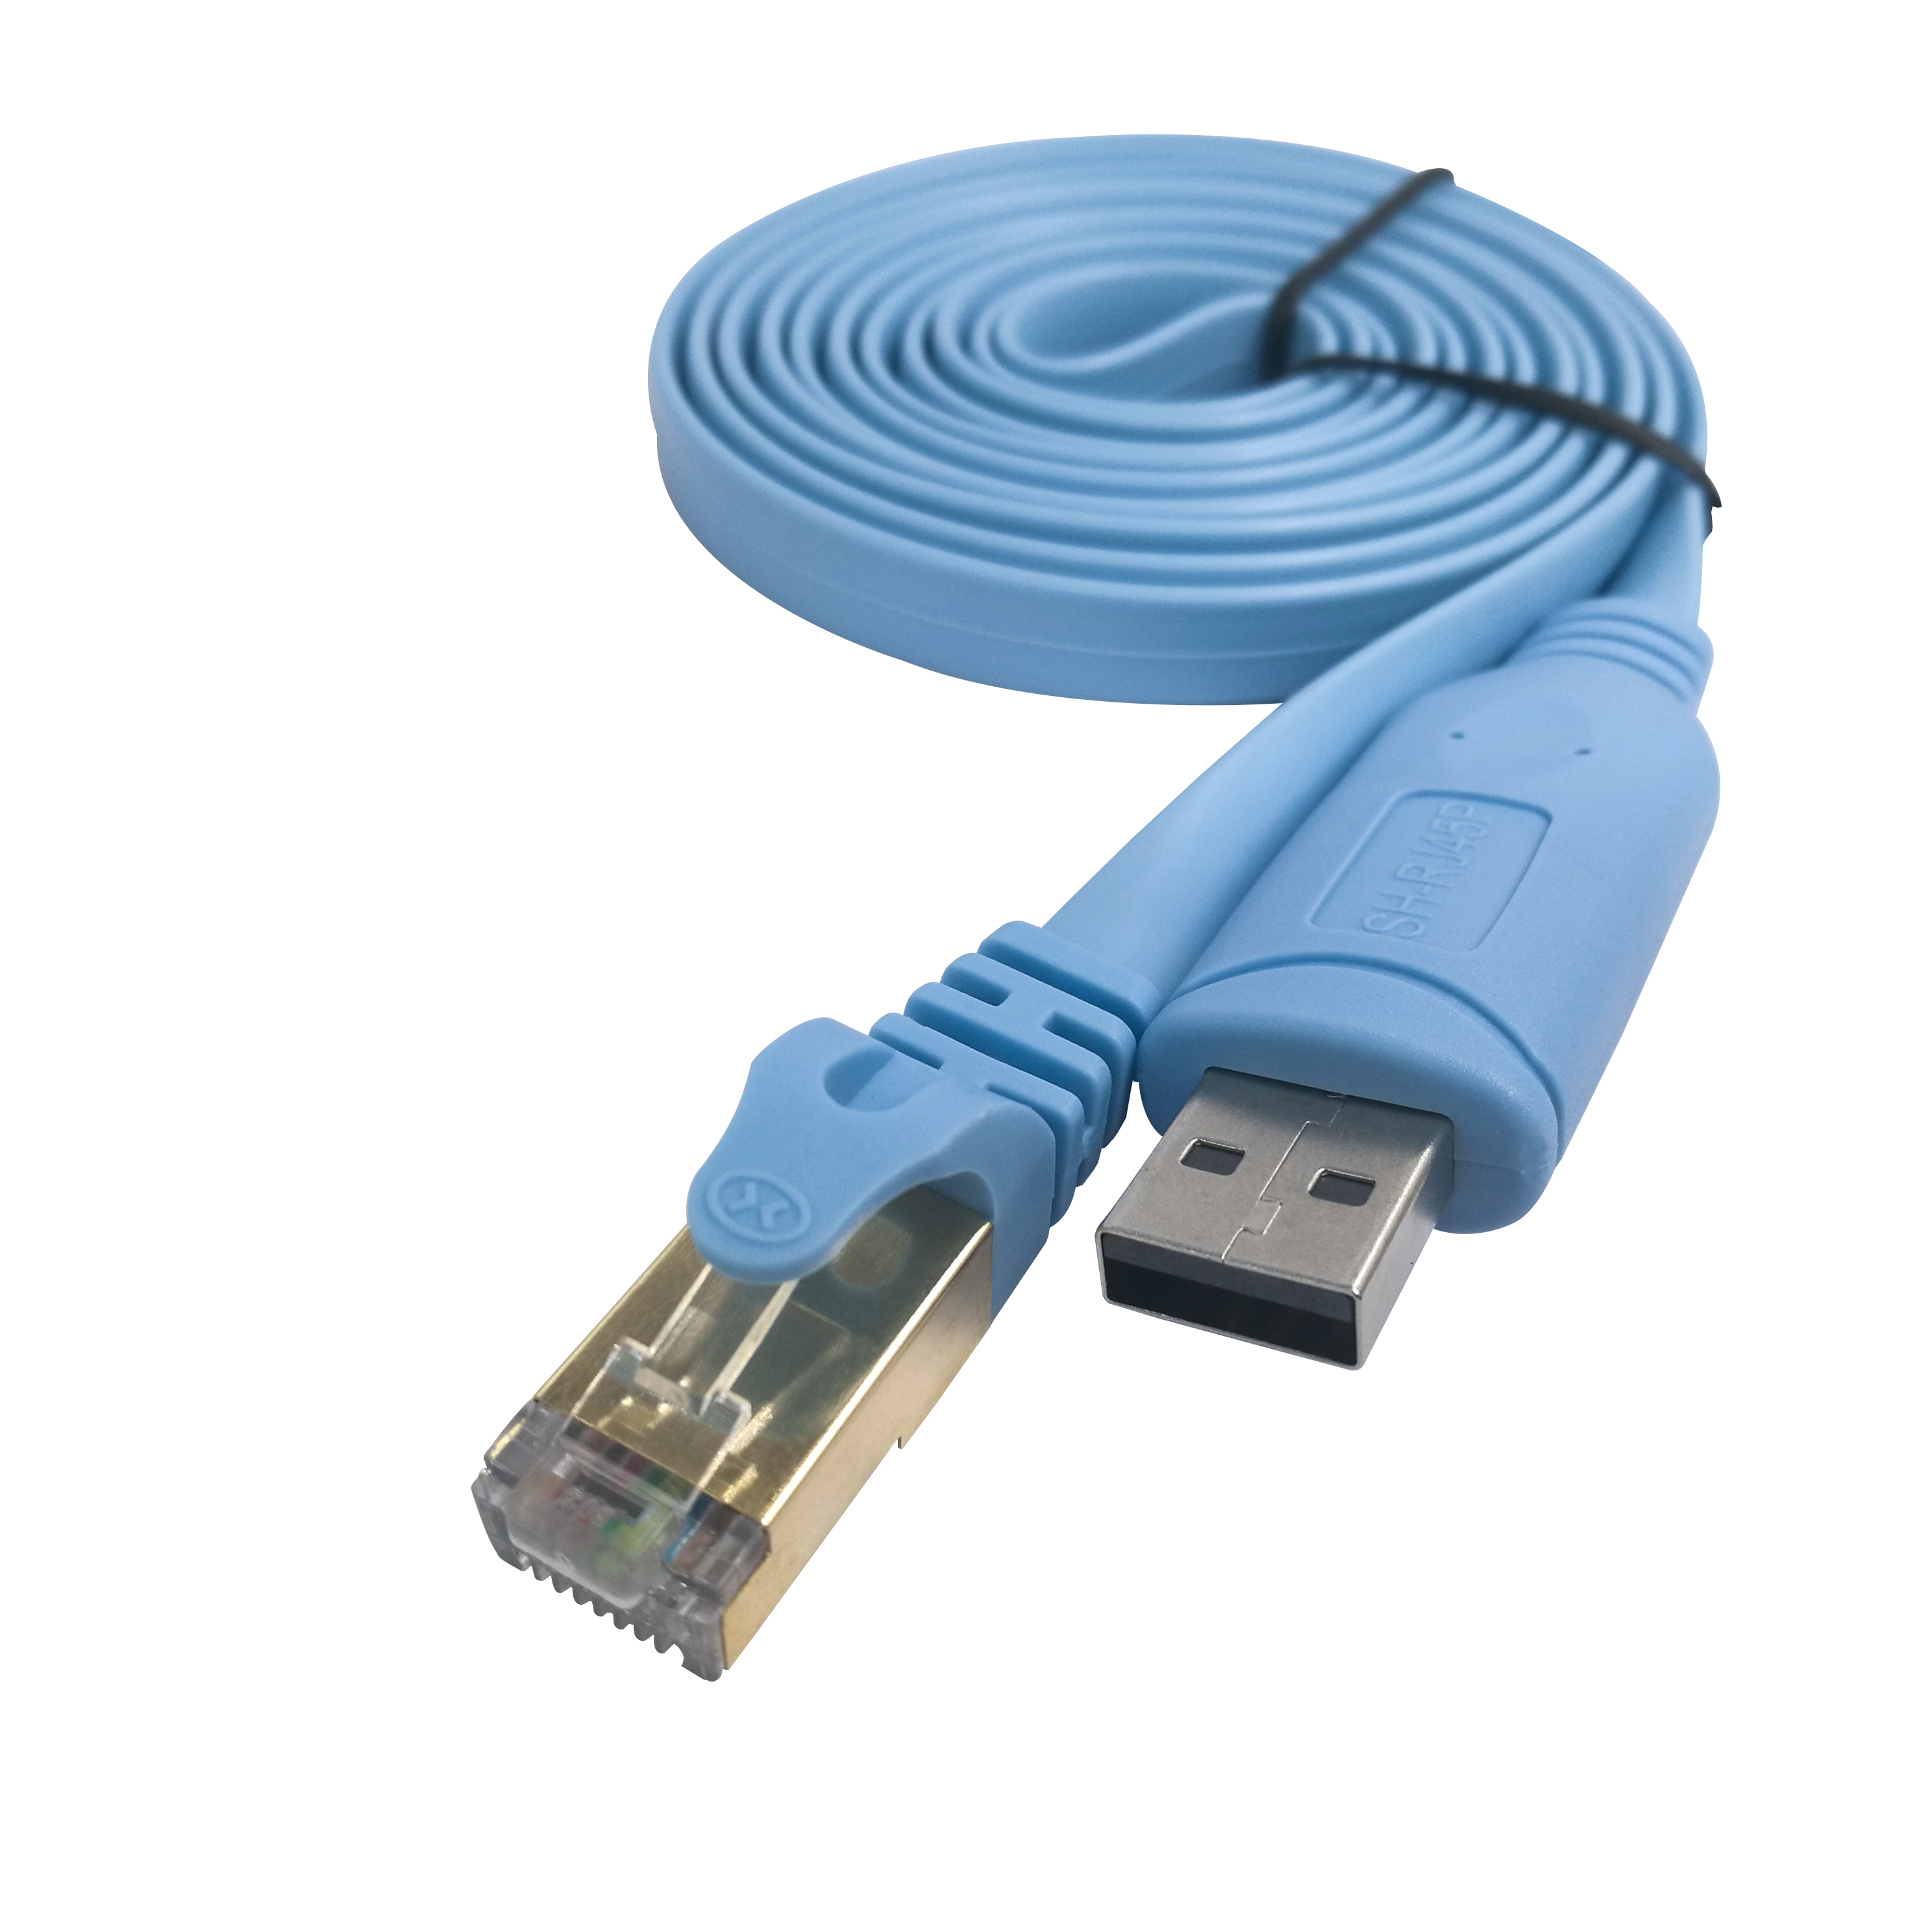 SH-RJ45P USB to RJ45 Console Cable